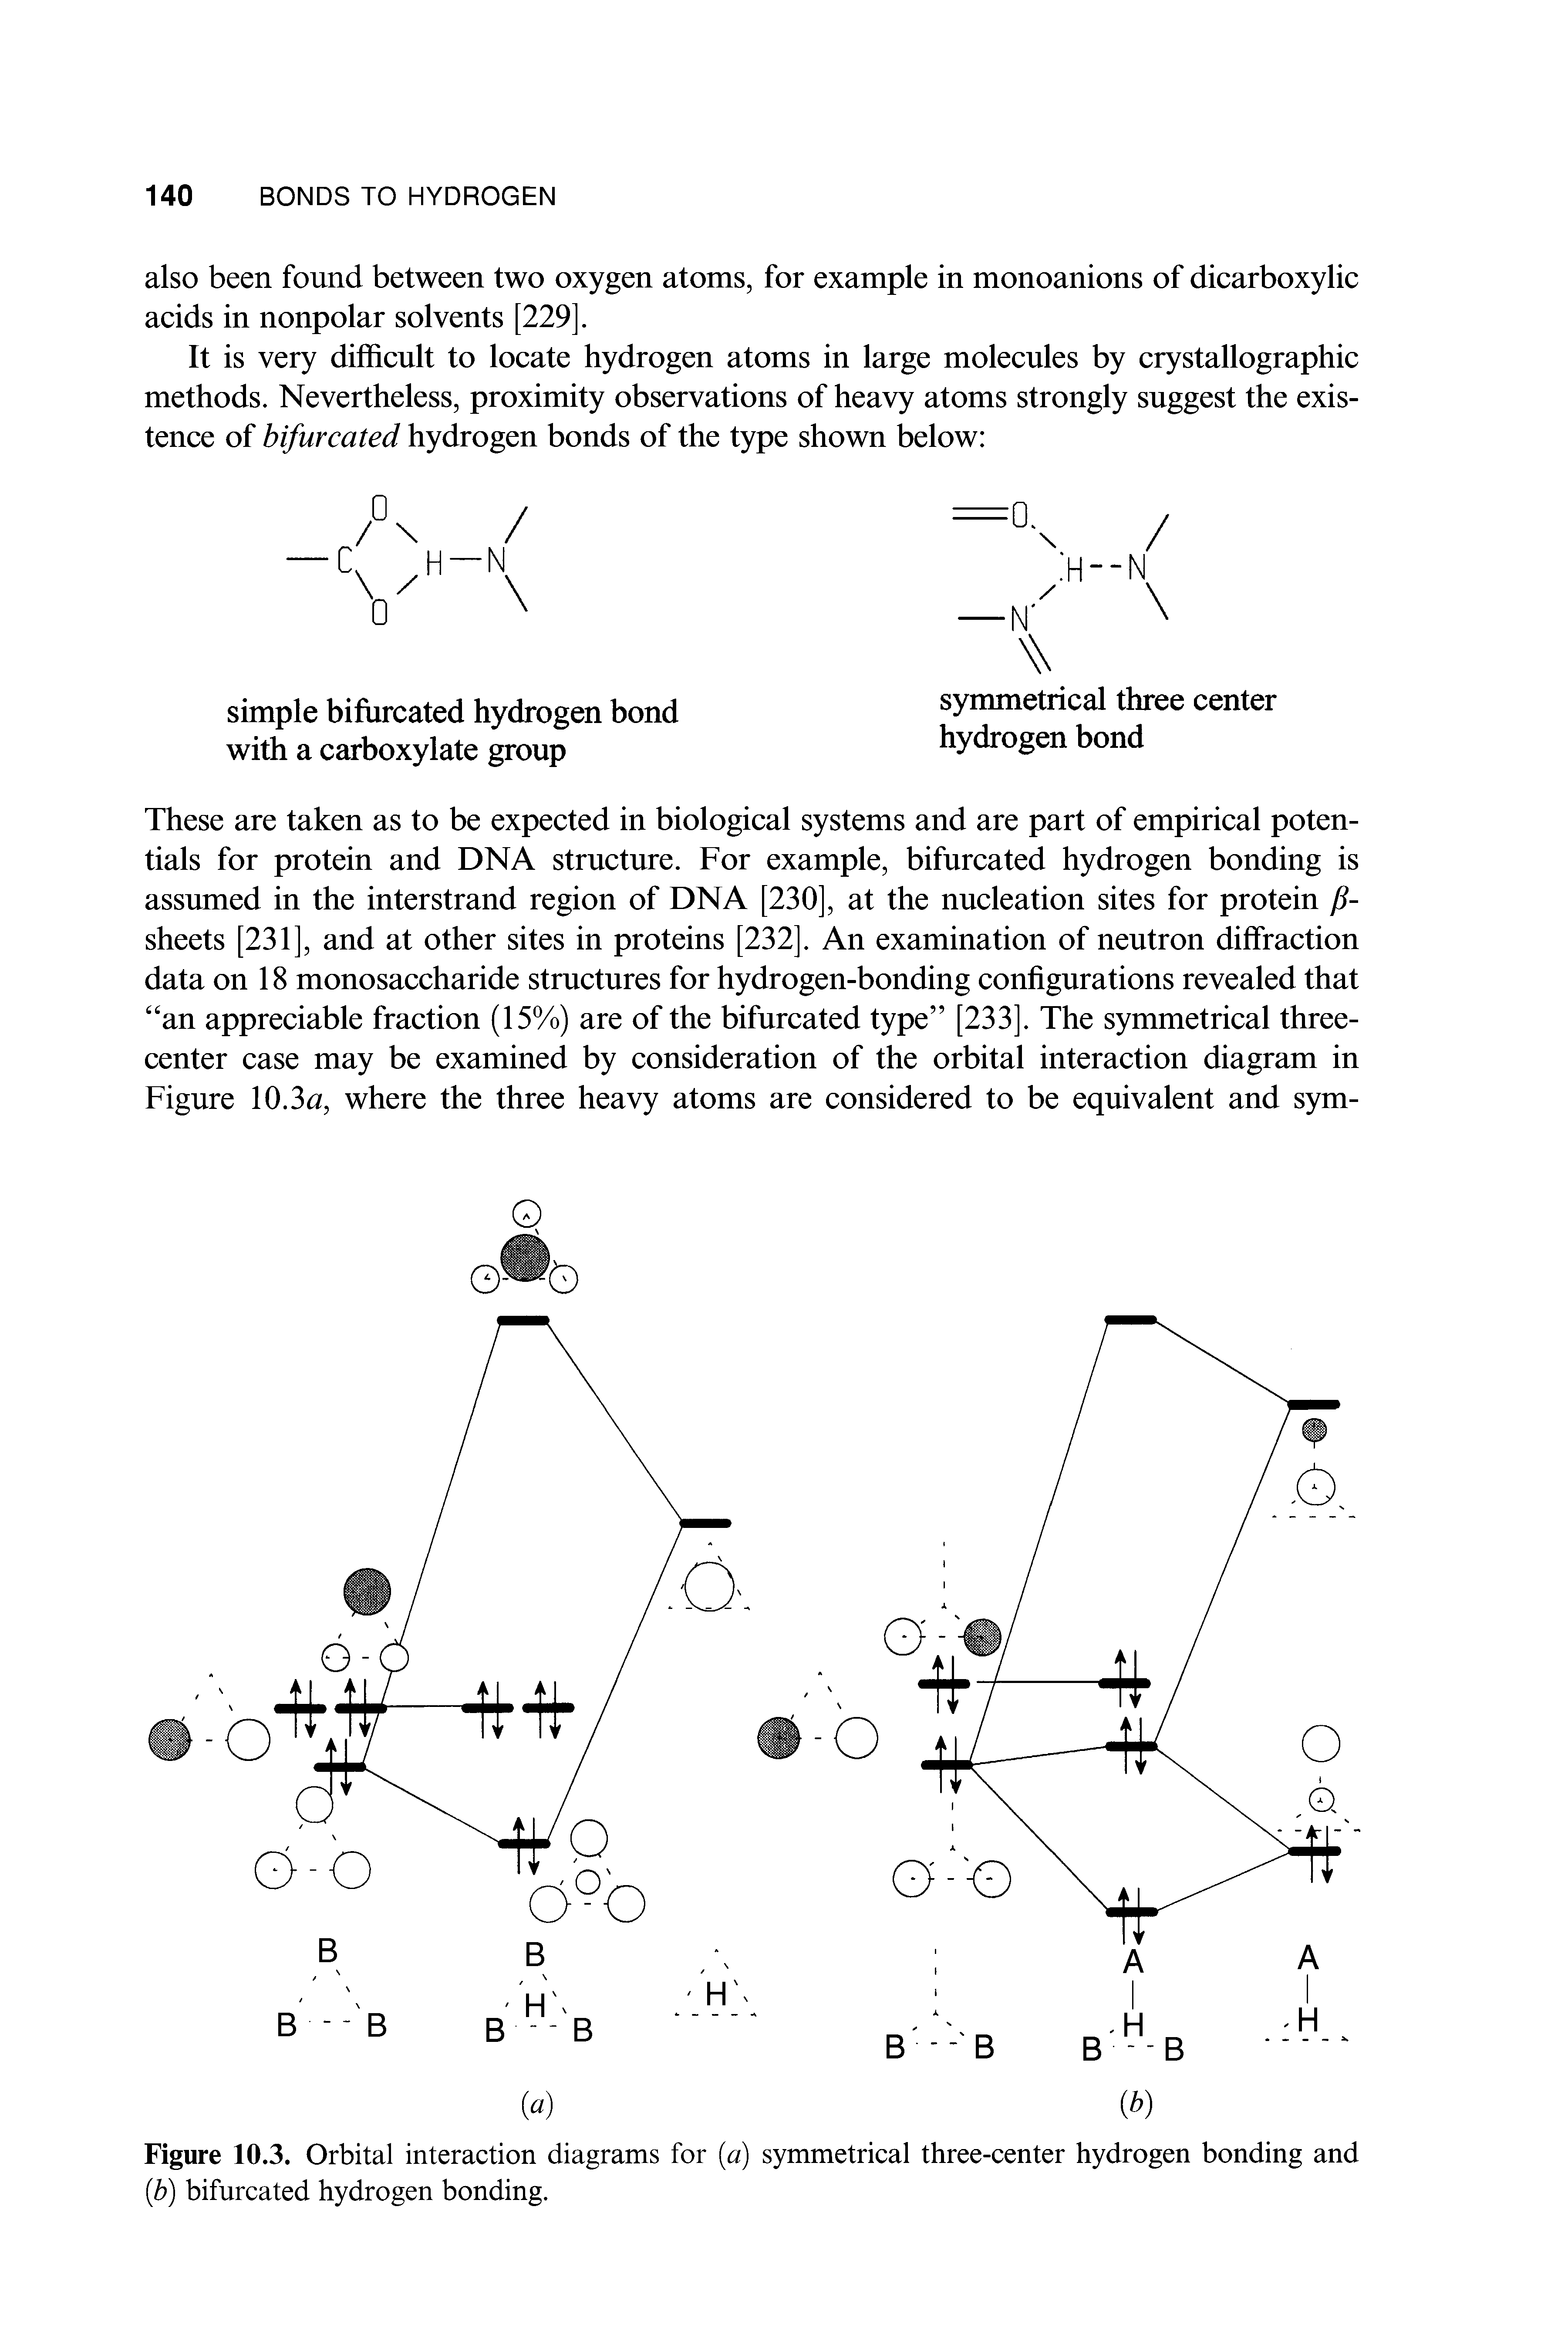 Figure 10.3. Orbital interaction diagrams for a) symmetrical three-center hydrogen bonding and b) bifurcated hydrogen bonding.